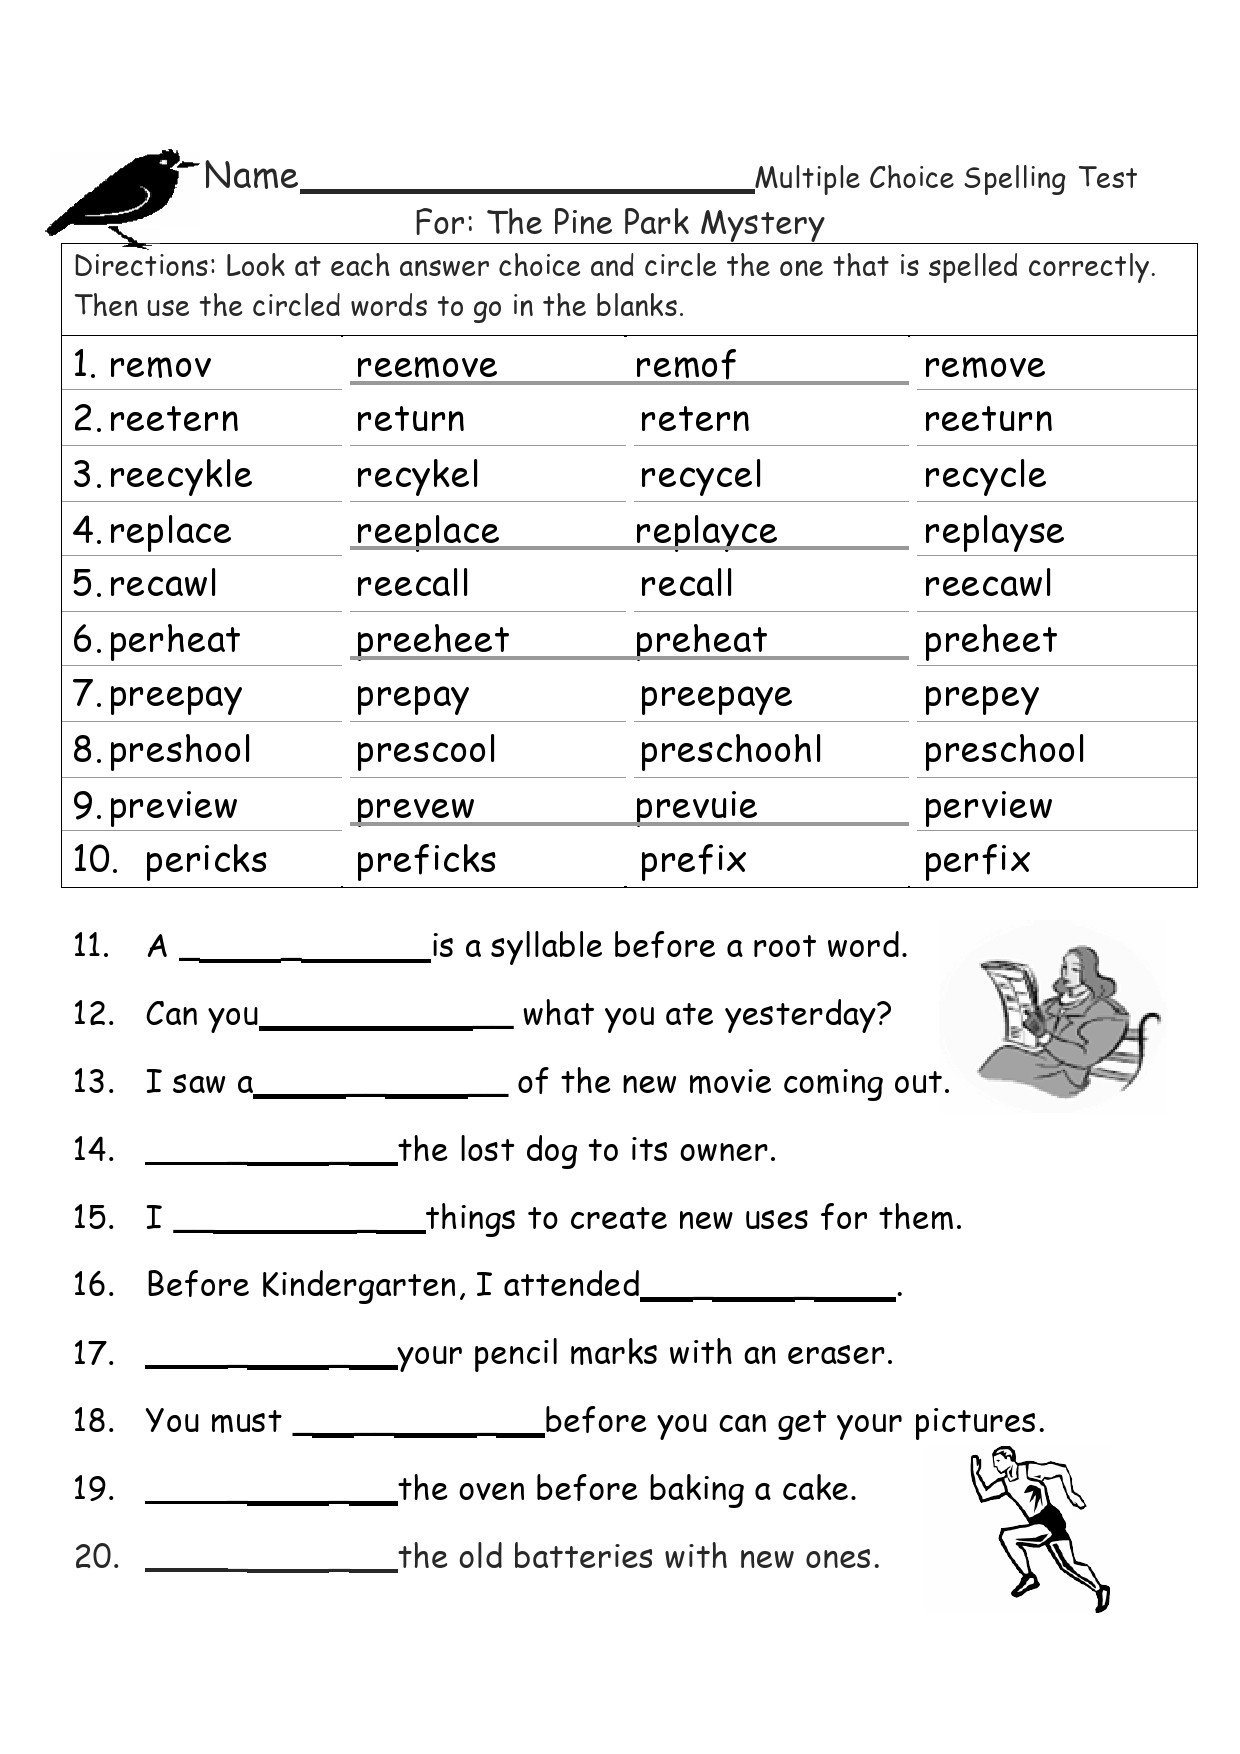 38 Printable Spelling Test Templates [Word & PDF] ᐅ TemplateLab